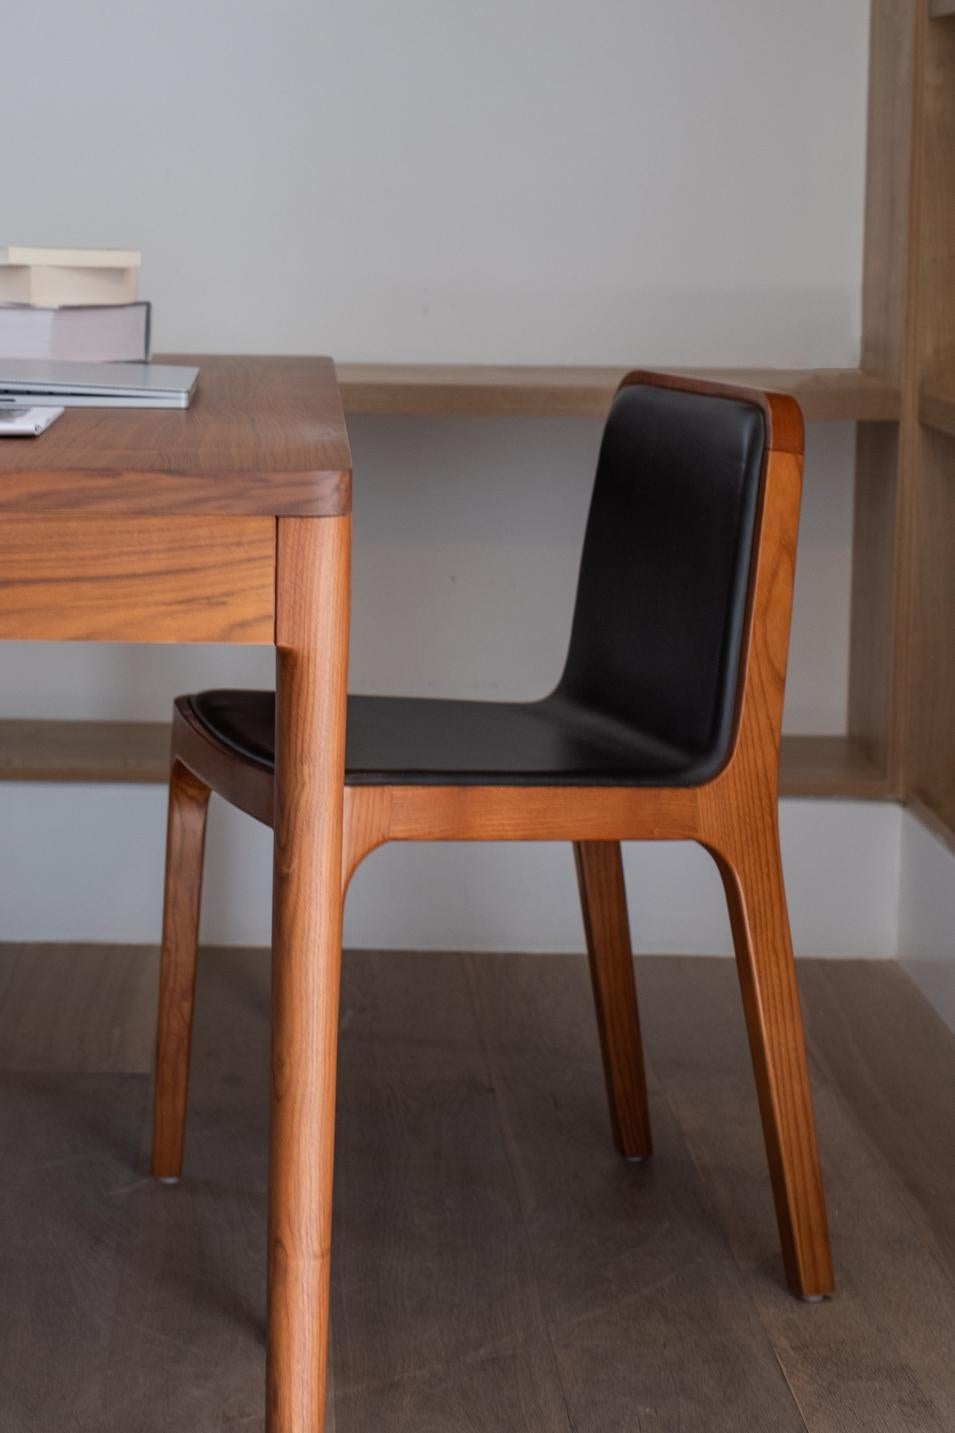 Minimalist Modern Chair in Beech Wood Fabric Upholstery 2